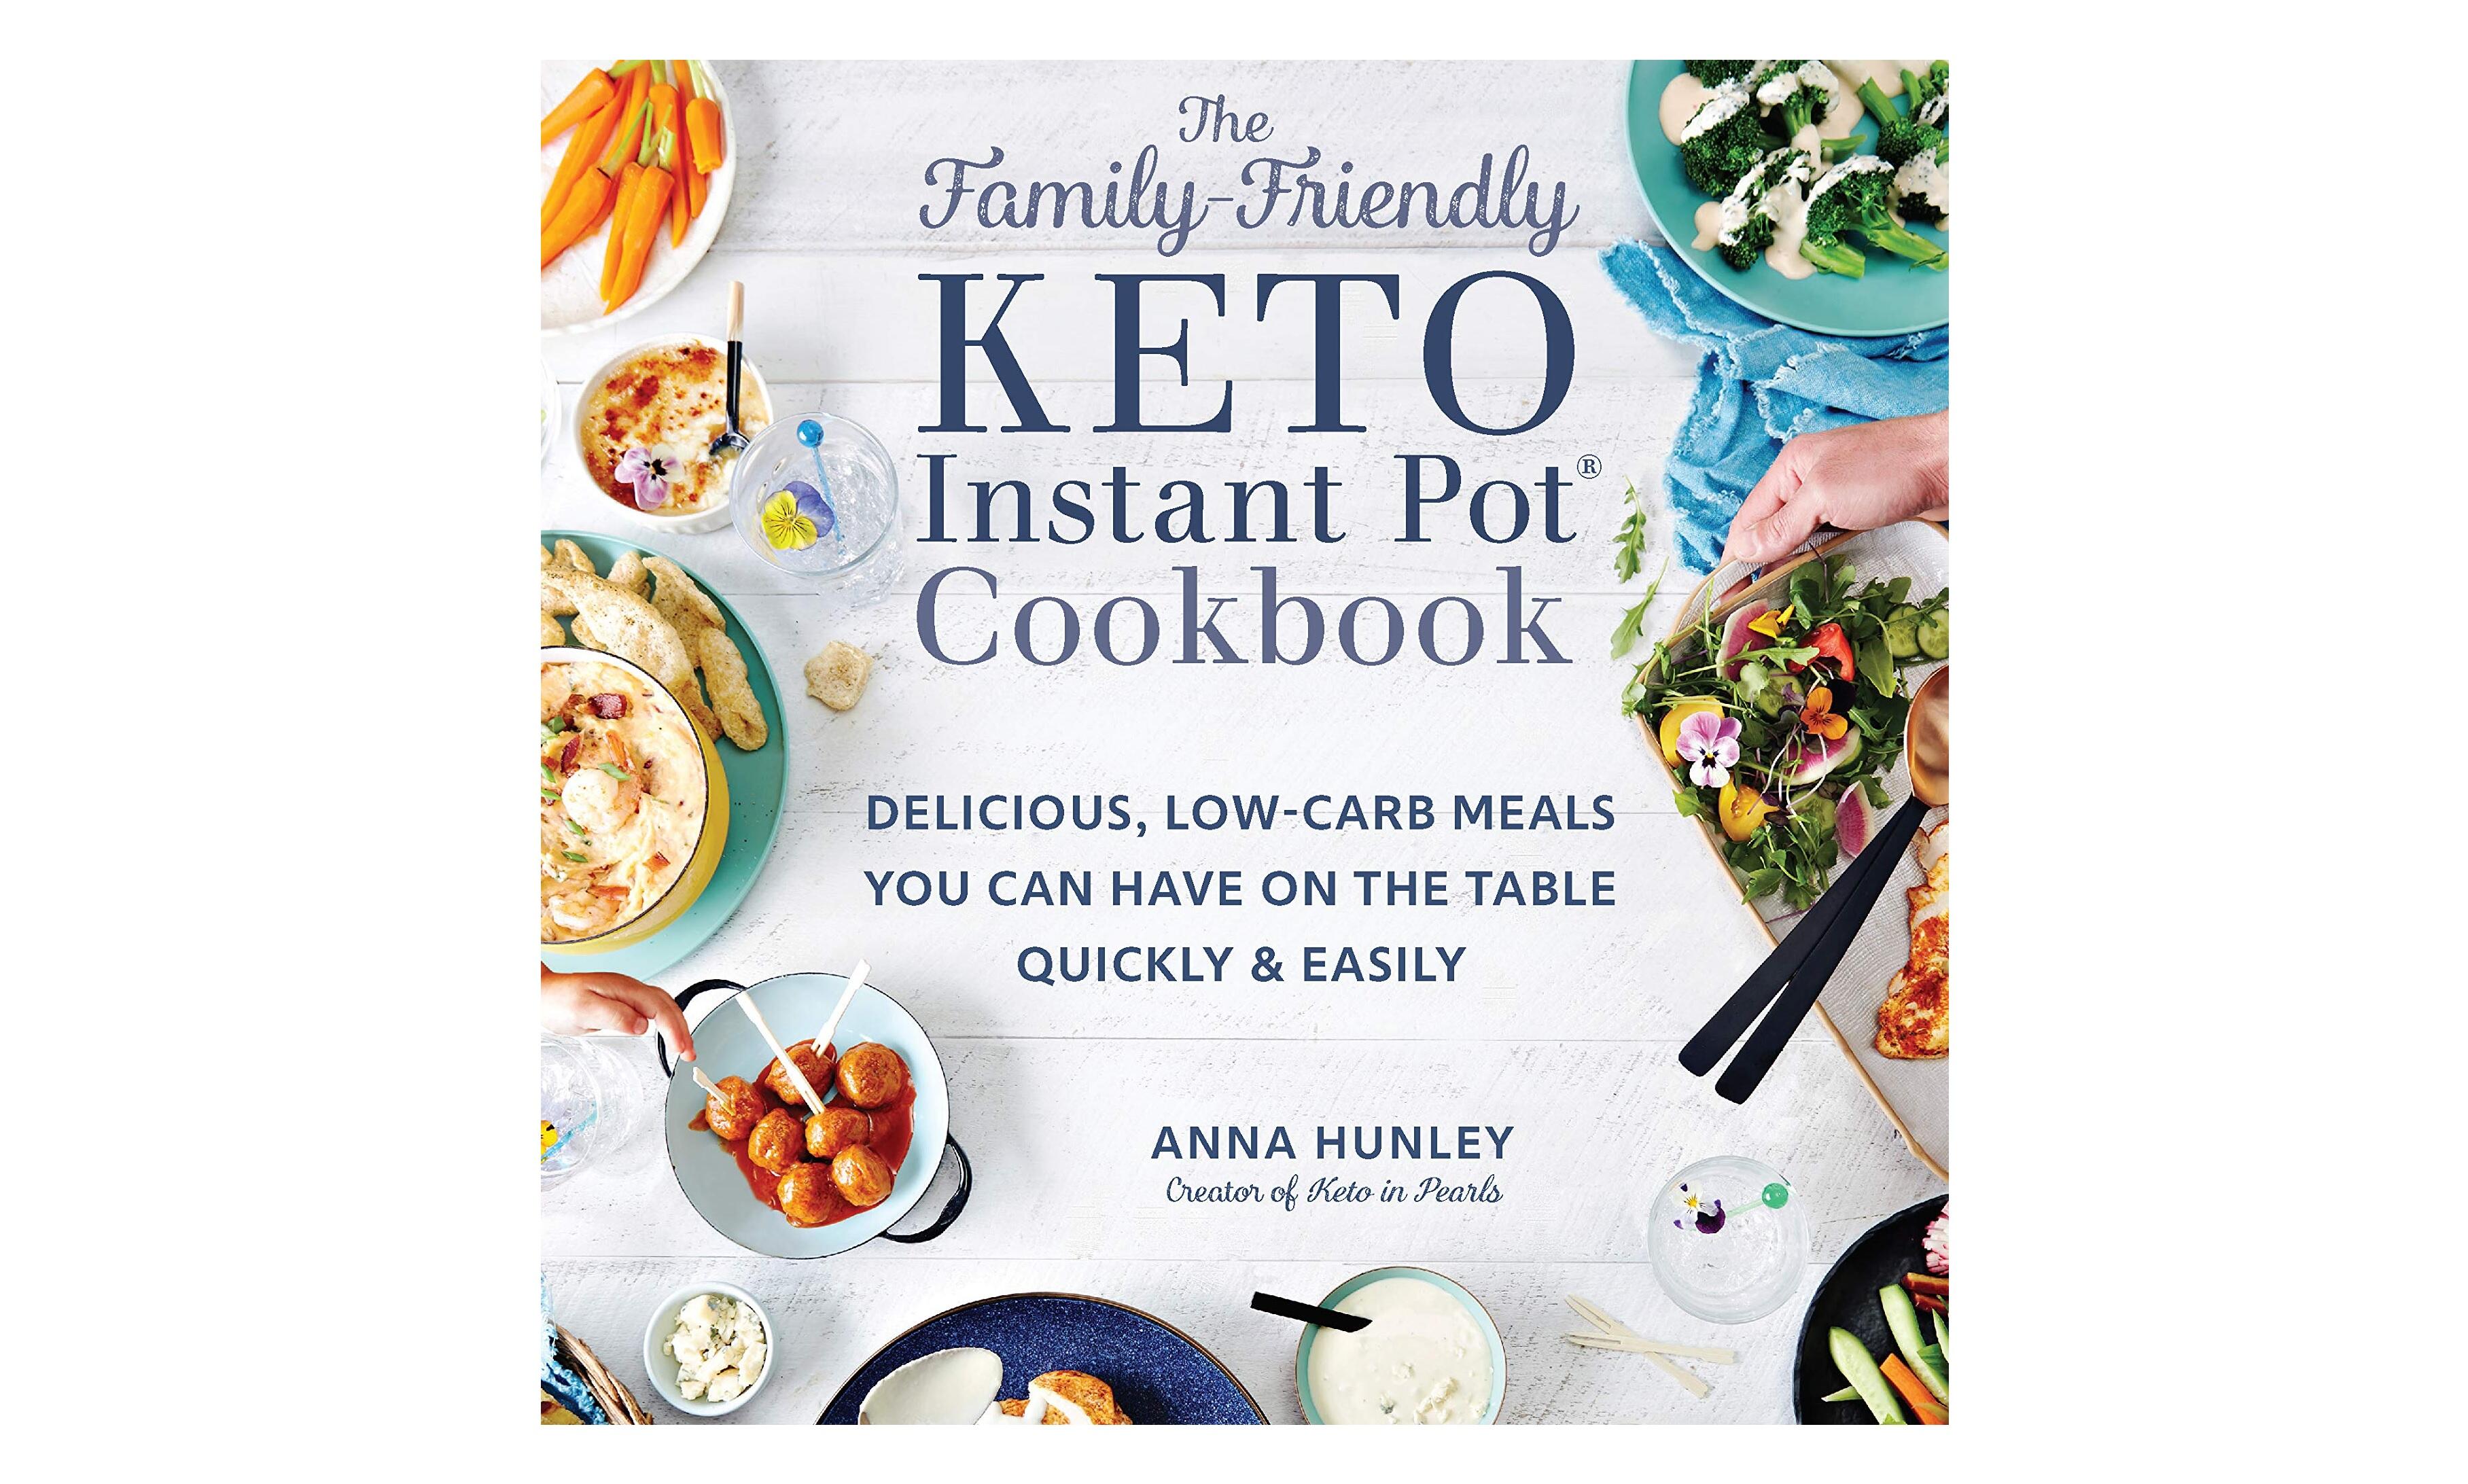 https://www.cnet.com/a/img/2020/05/21/ac6d7ade-d078-4971-afbb-3d765d9c24f6/keto-instant-pot-cookbook.jpg